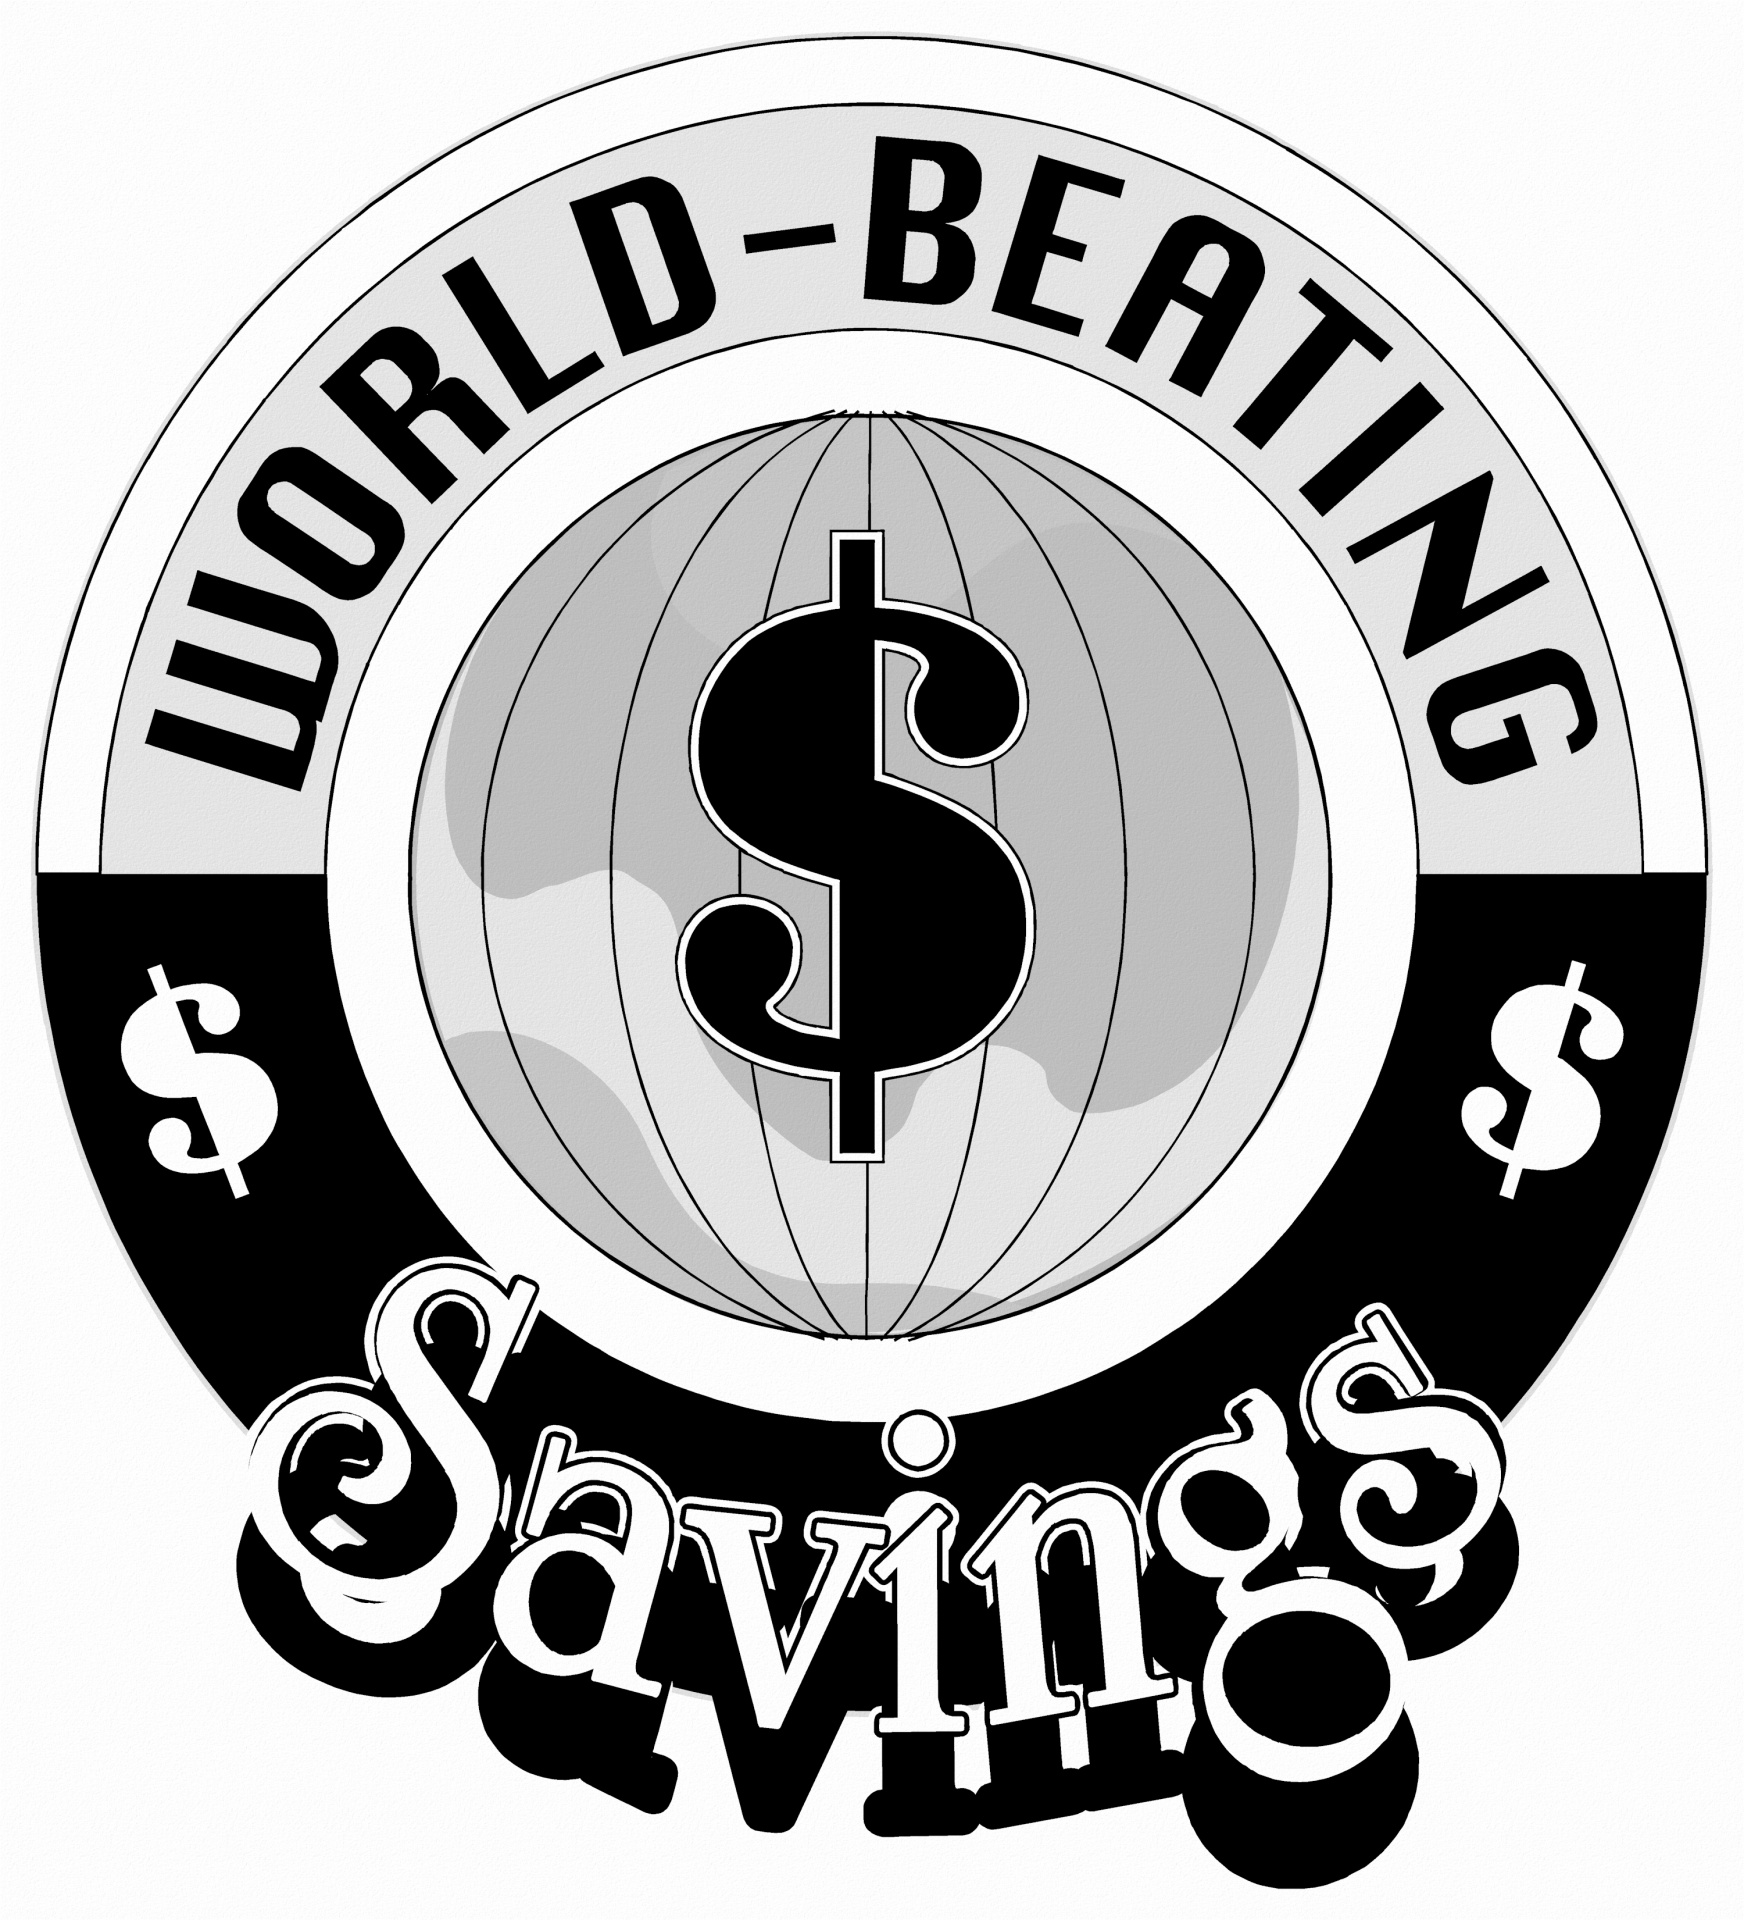 World Beating Savings